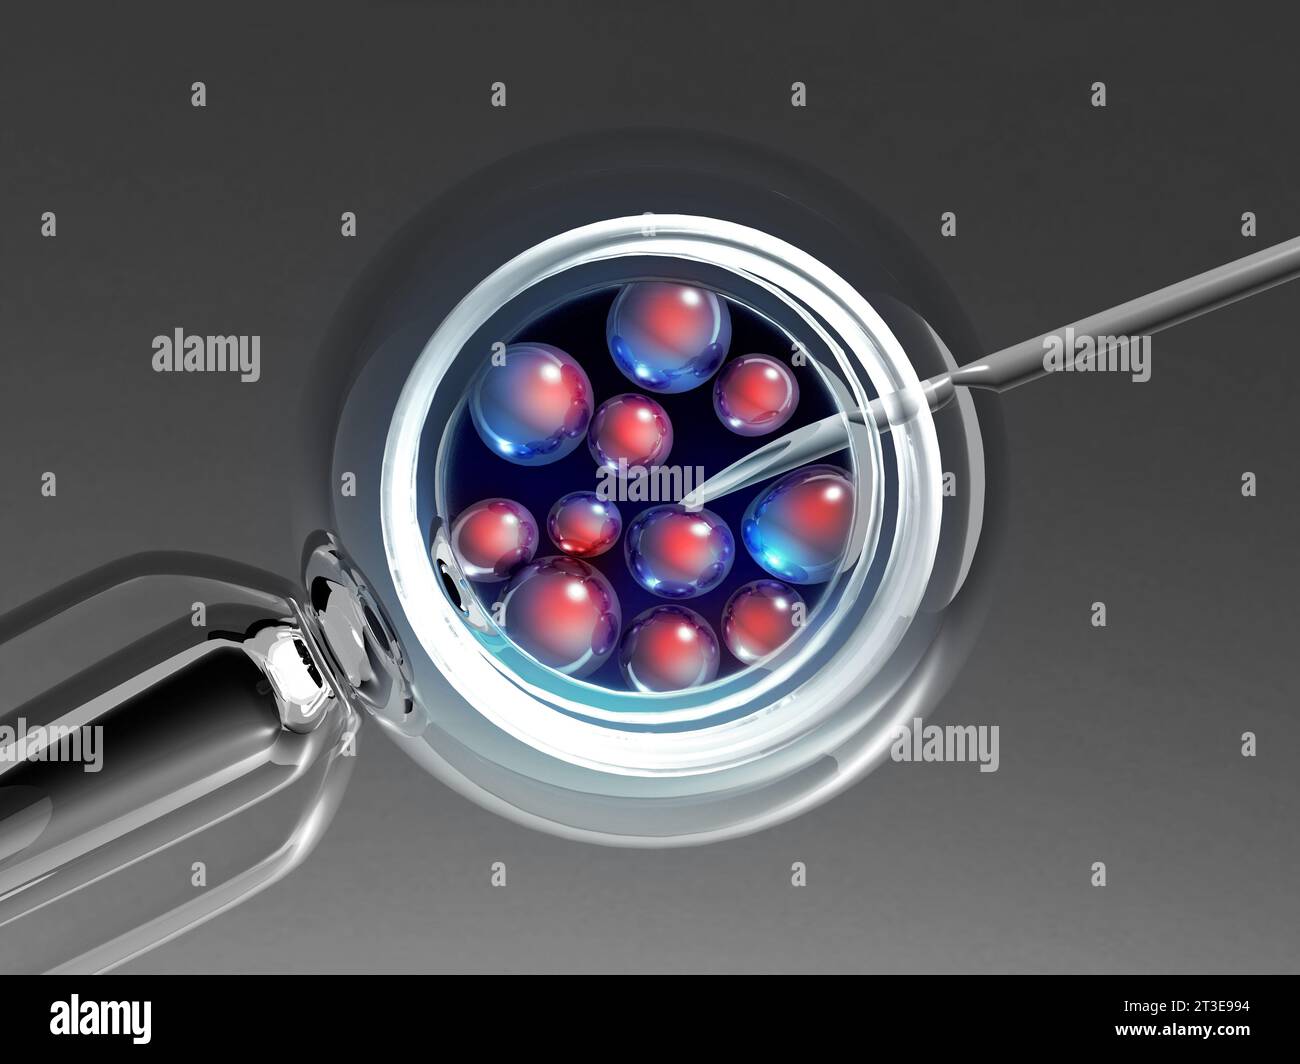 IVF. In vitro fertilization. 3d render Stock Photo